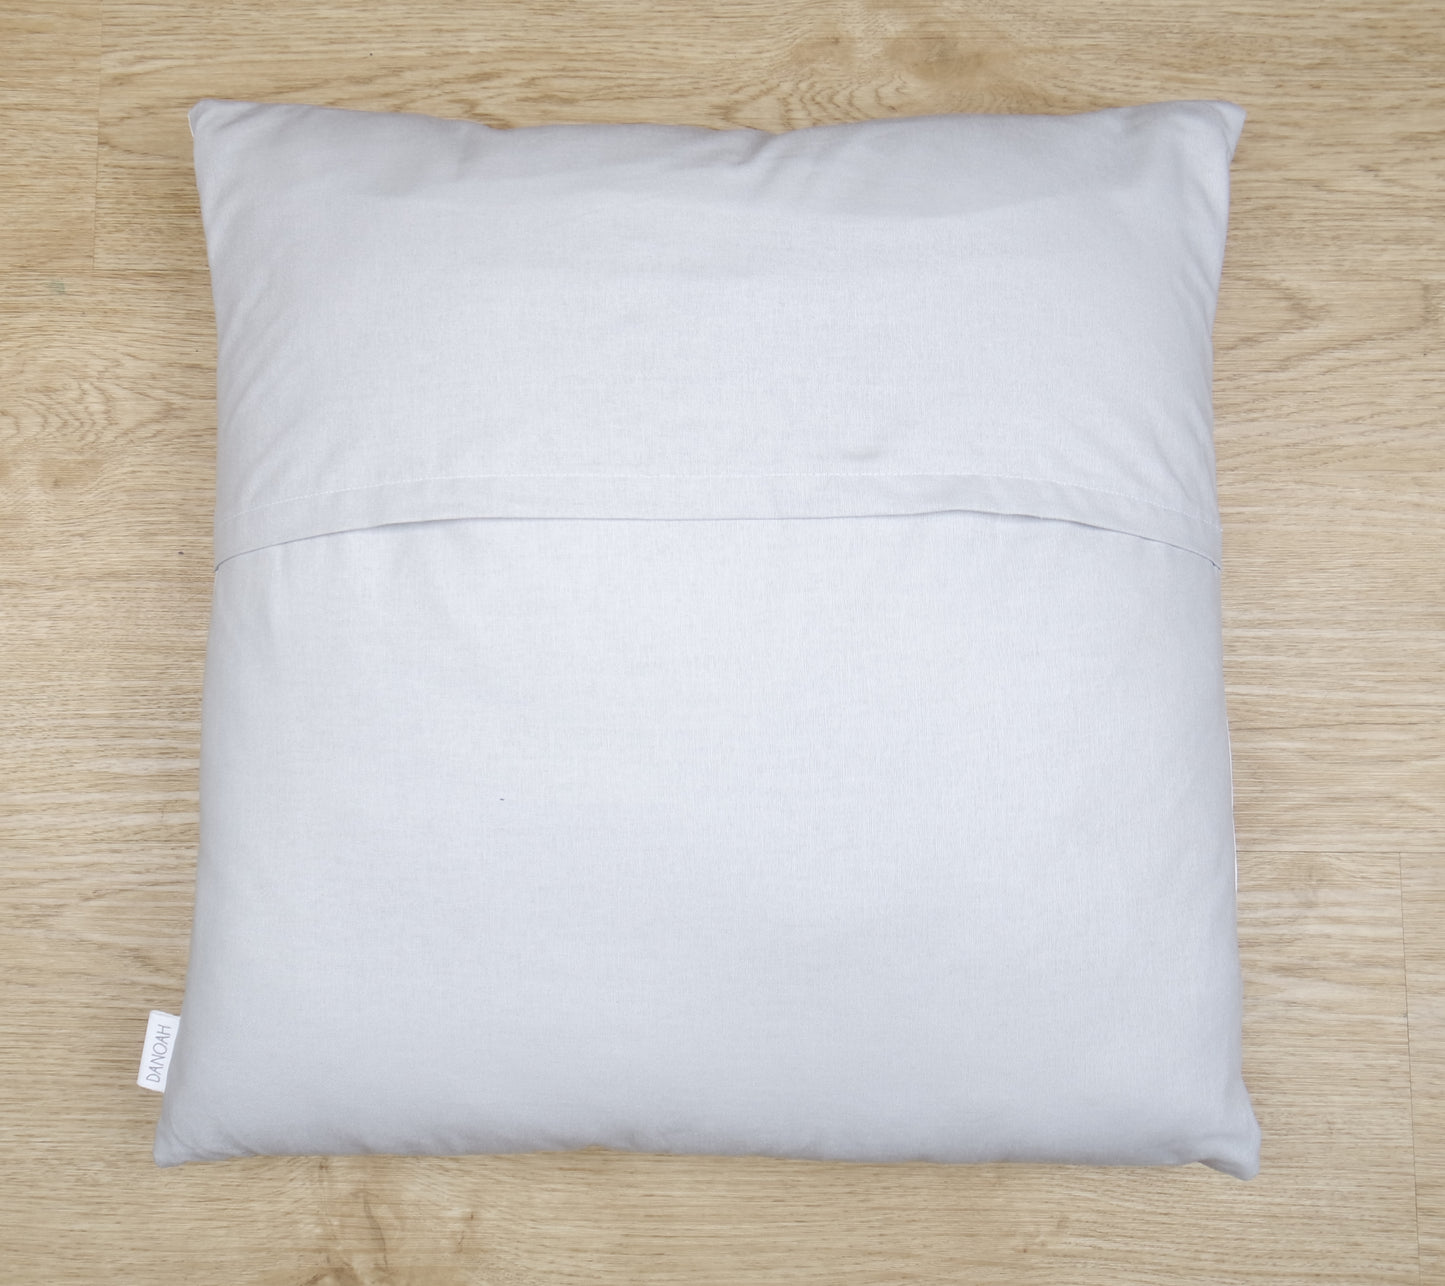 Grey Woodland Patchwork Cushion Cover